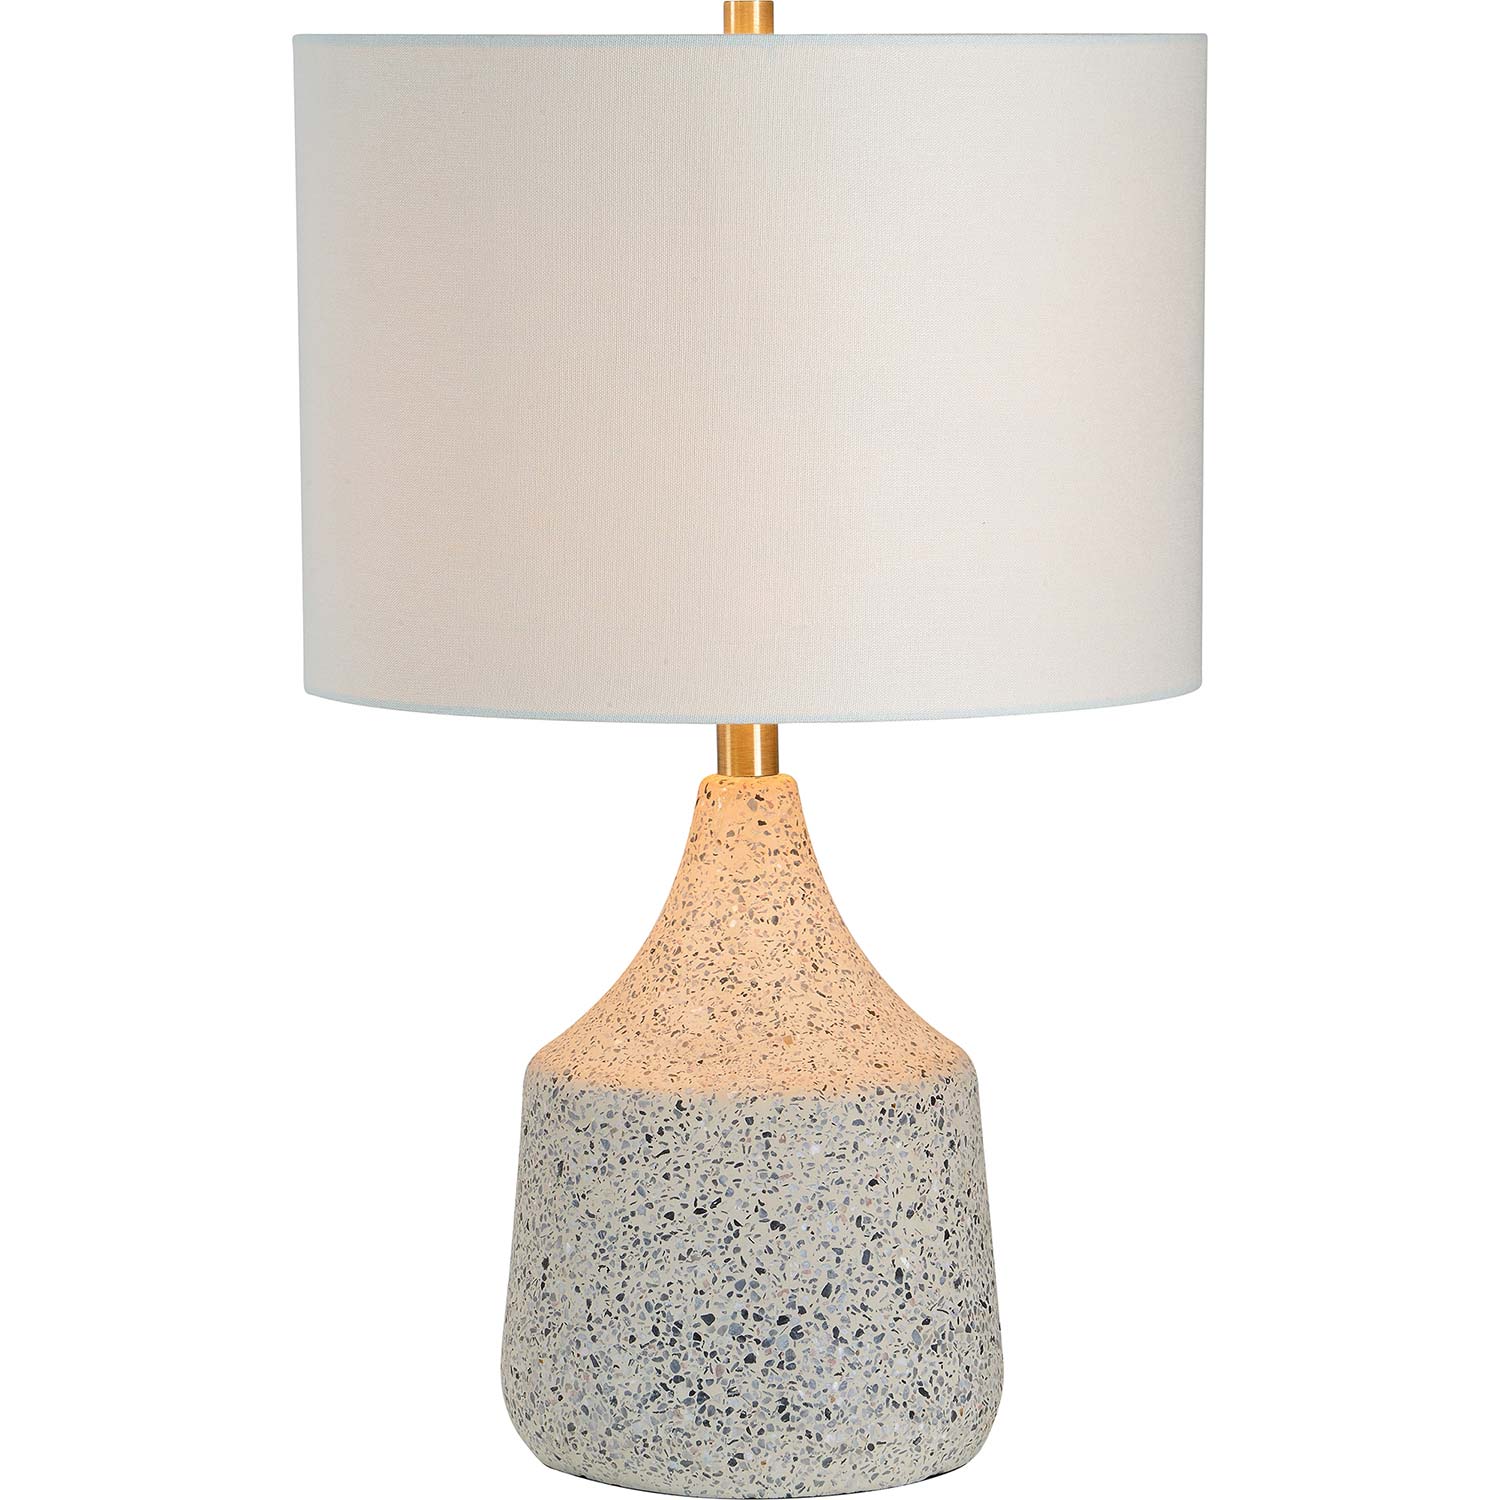 Ren-Wil Longmore Table Lamp - Beige Cement/Stone Speckles